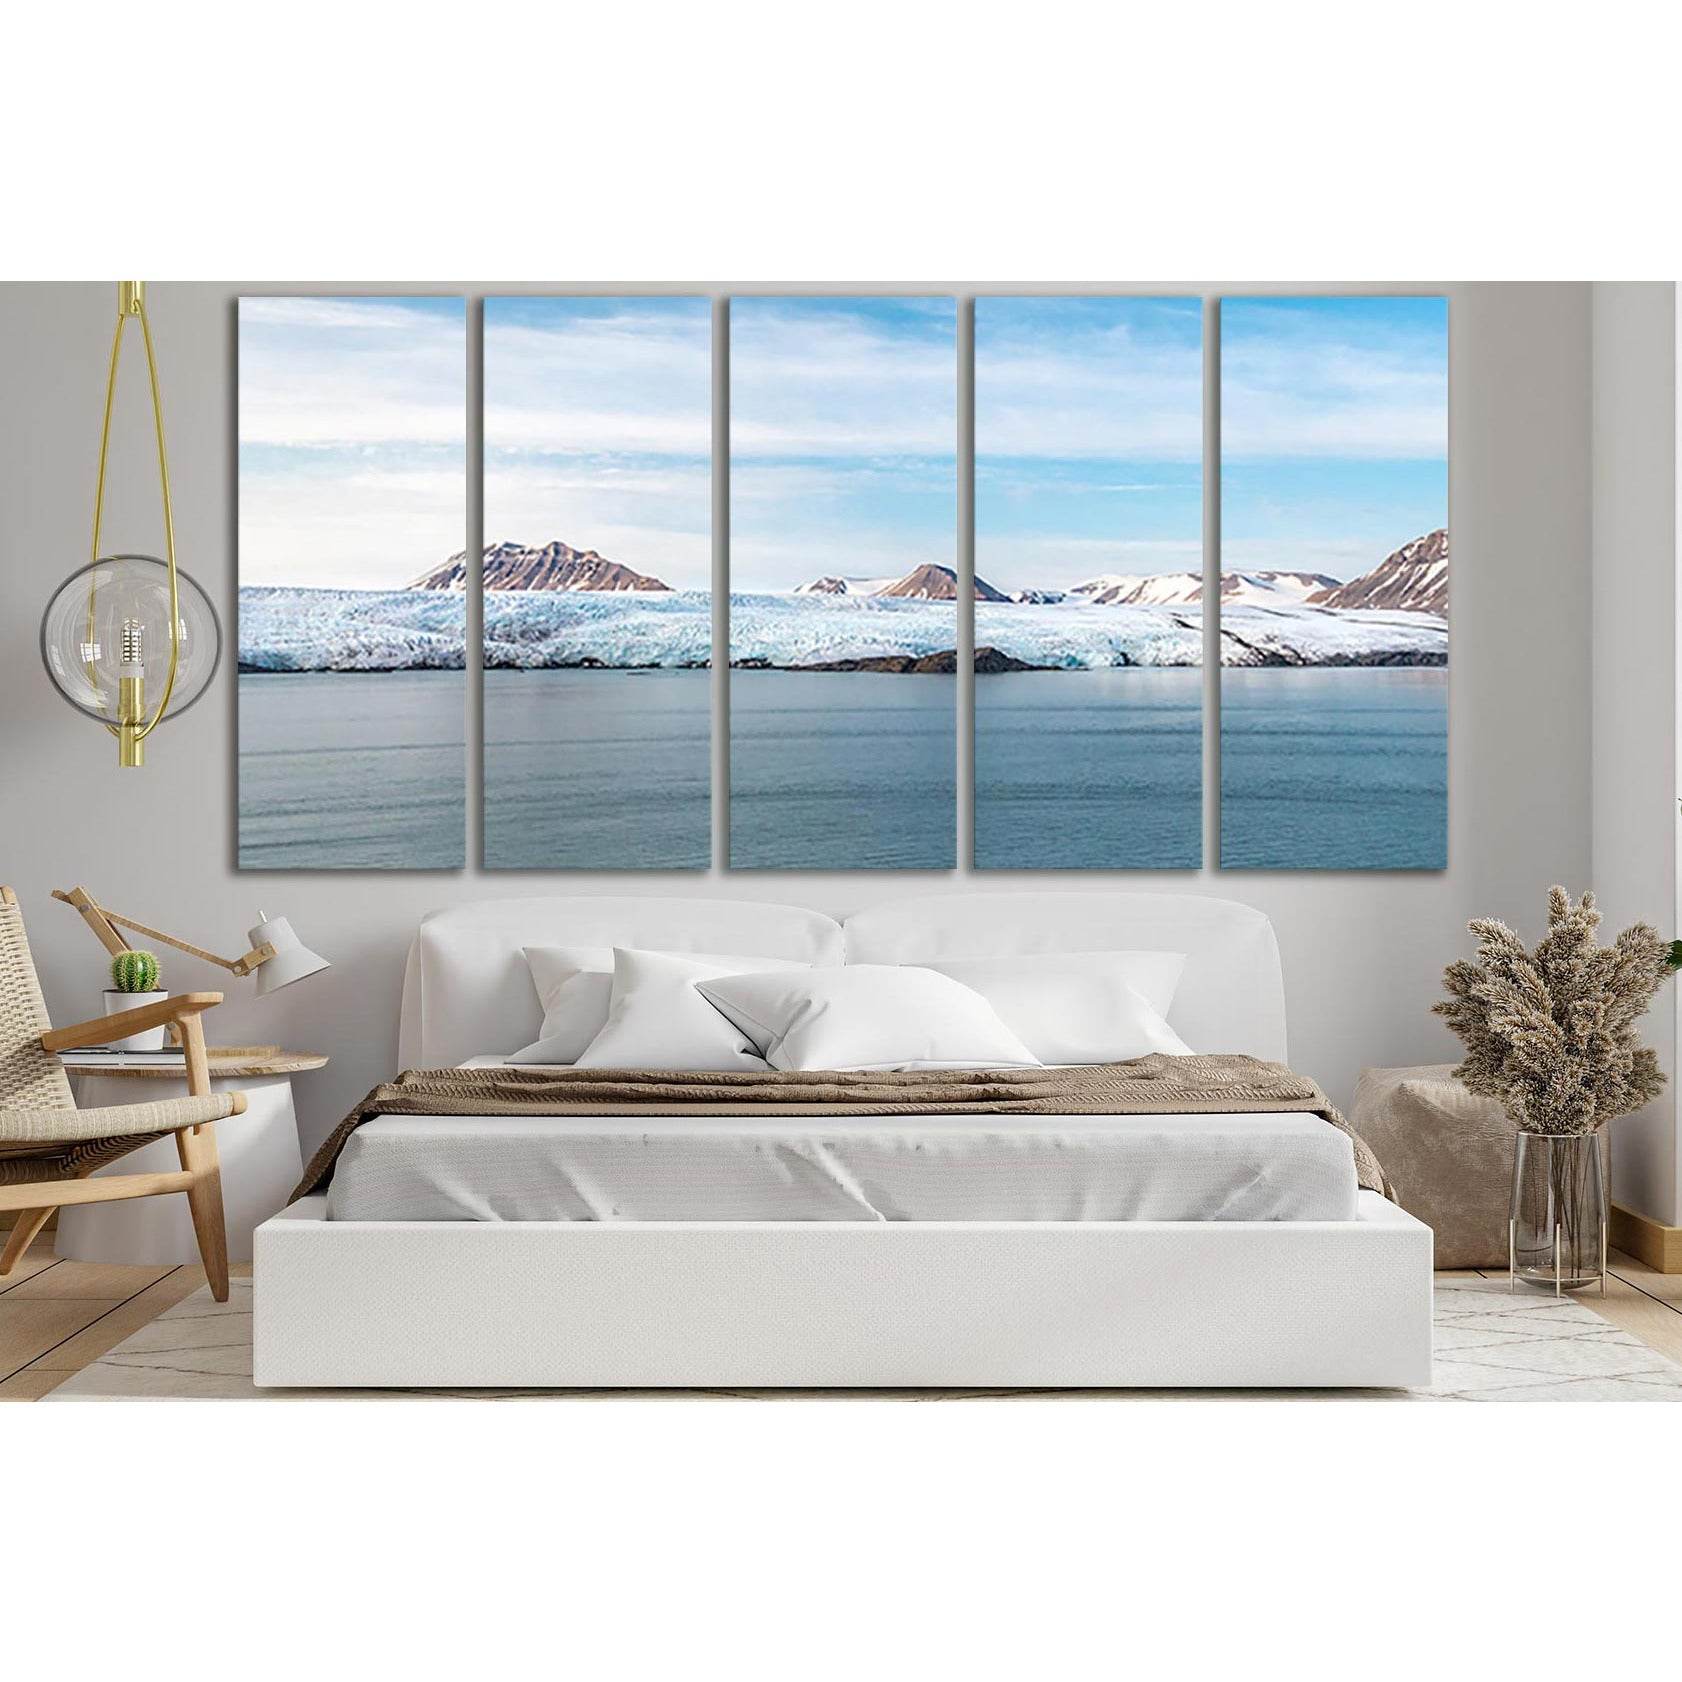 Nordenskiöld Glacier At Pyramiden On Svalbard №SL1340 Ready to Hang Canvas Print